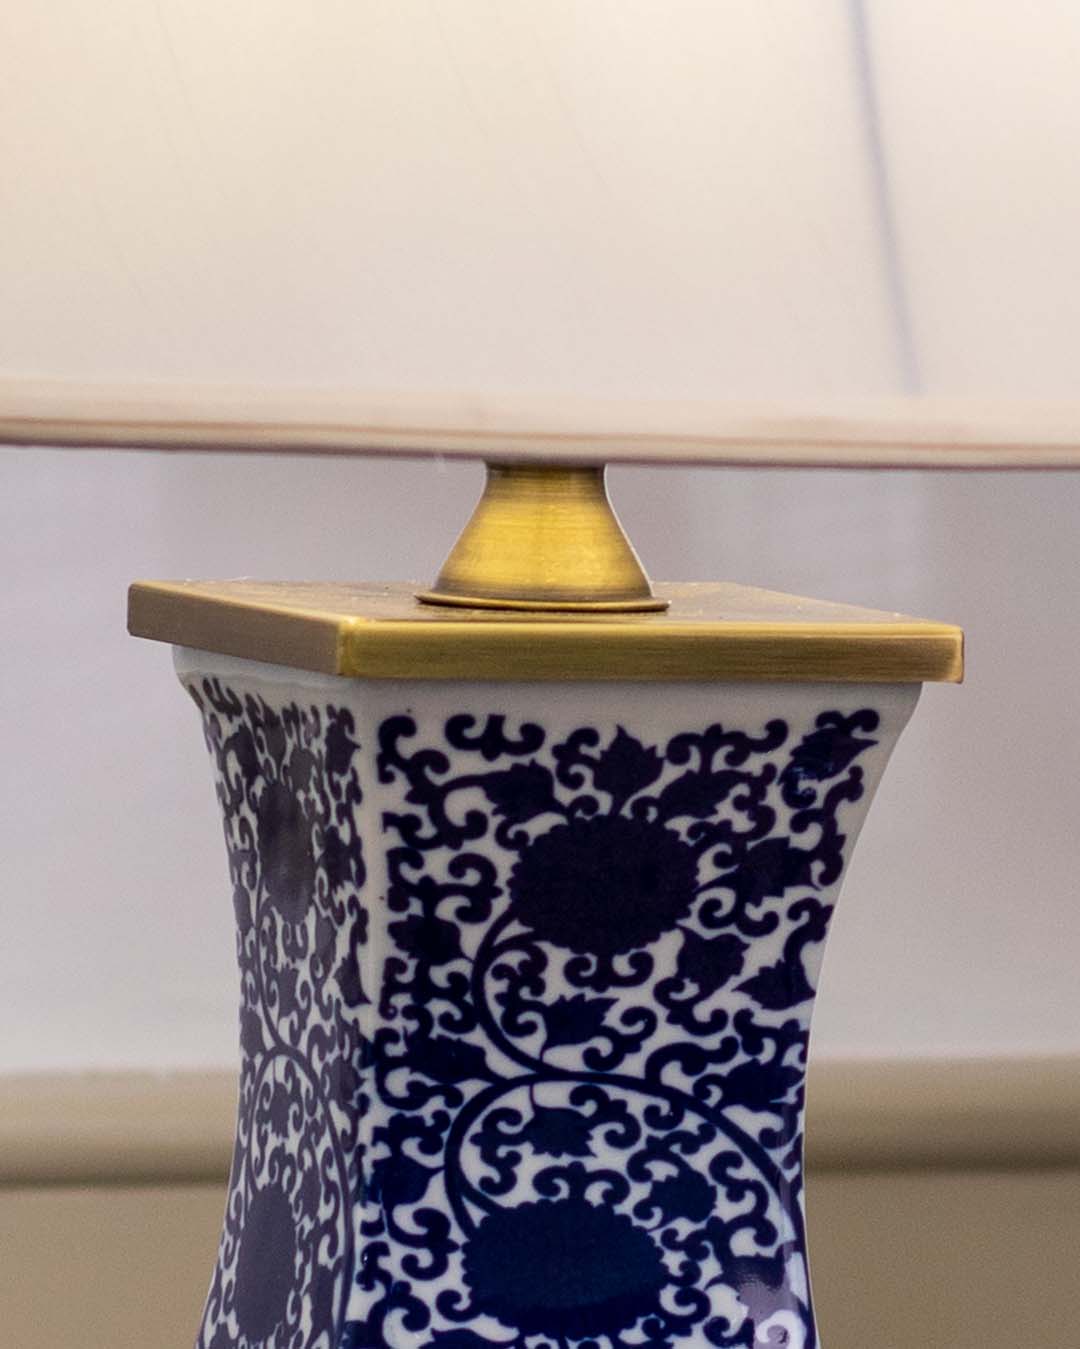 'Warriors' Fan Shape Porcelain Vase Table Lamp